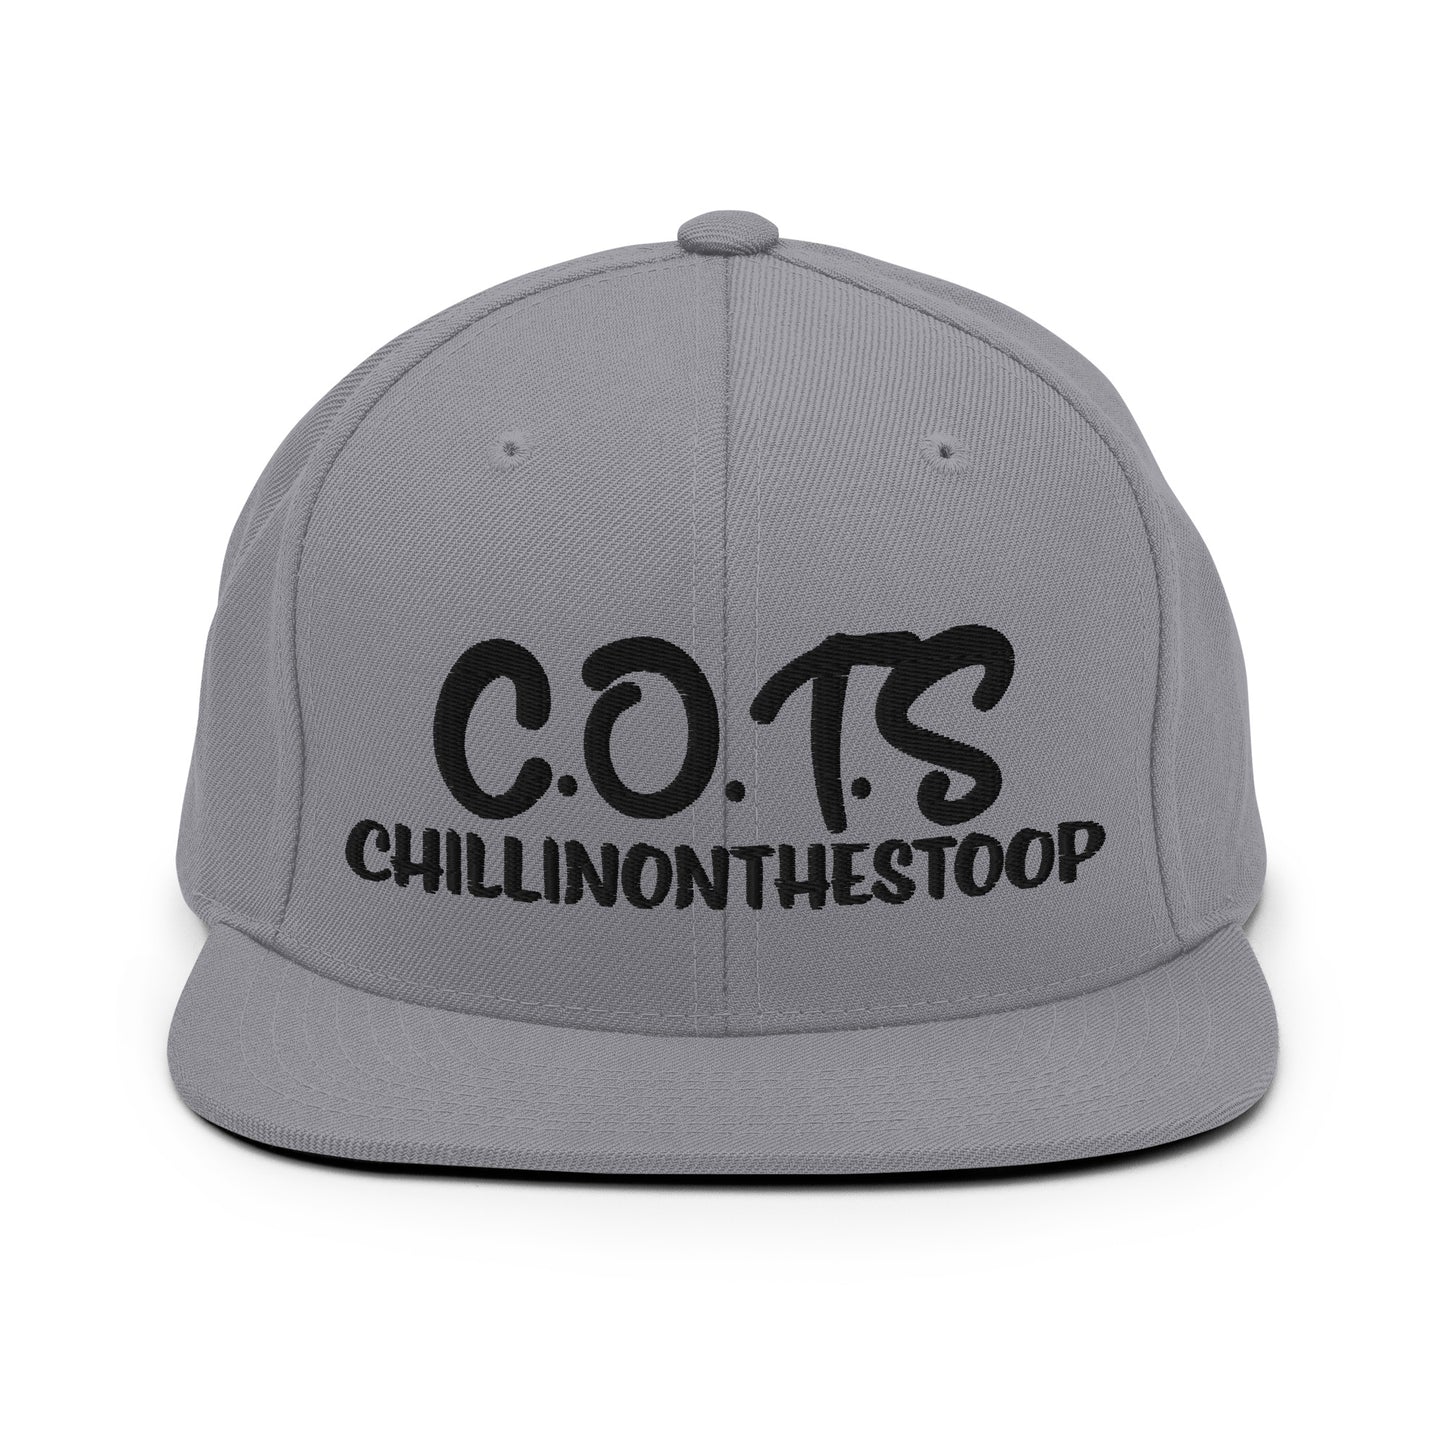 C.O.T.S chillinonthestoop Snapback Hat